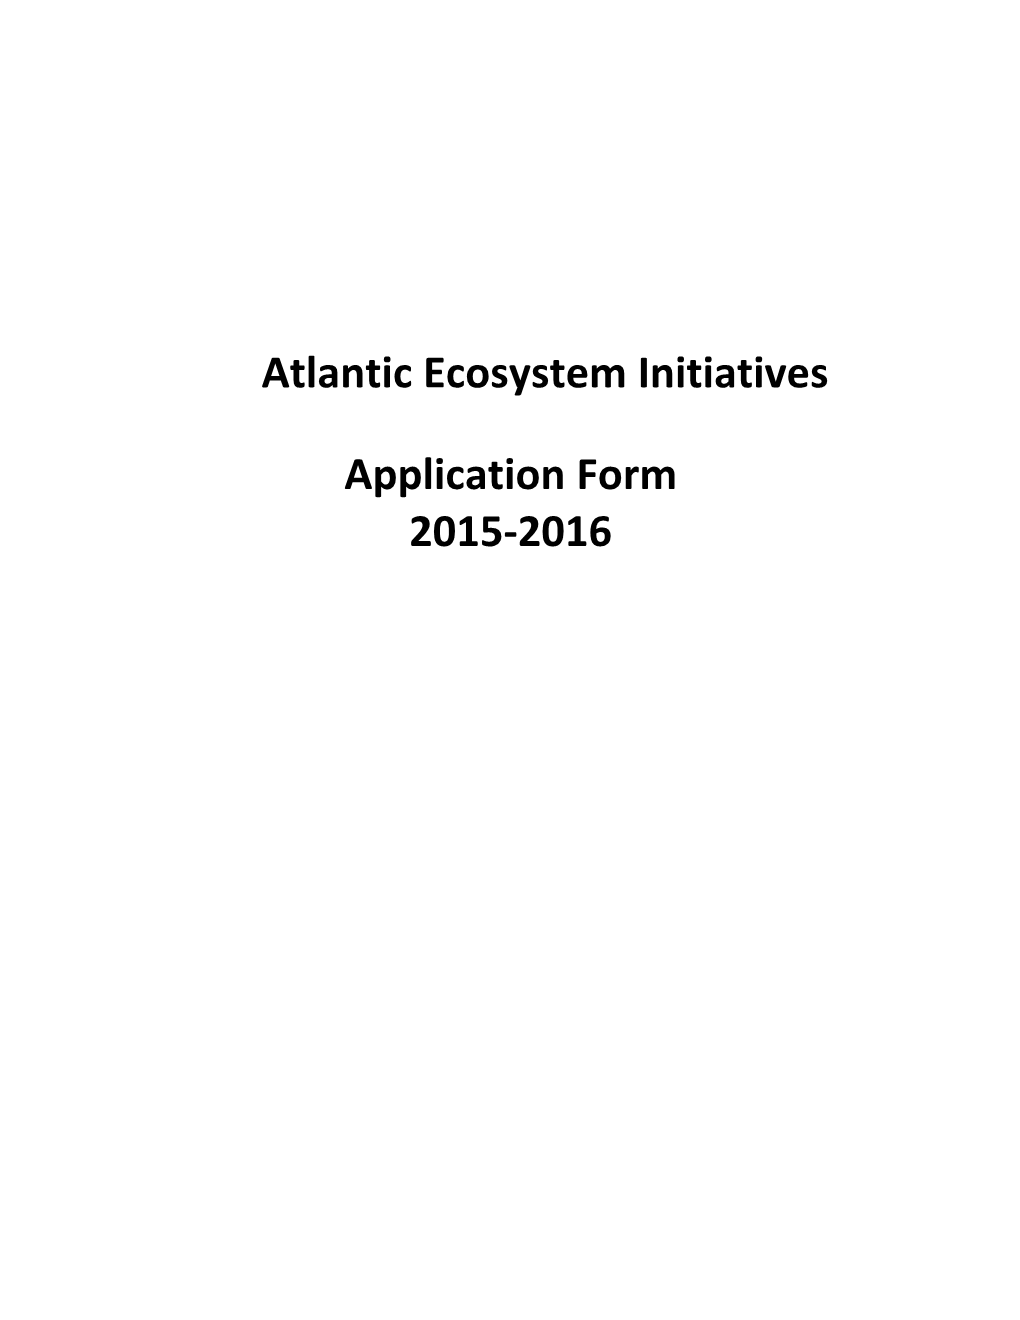 Atlantic Ecosystem Initiatives: Application Form